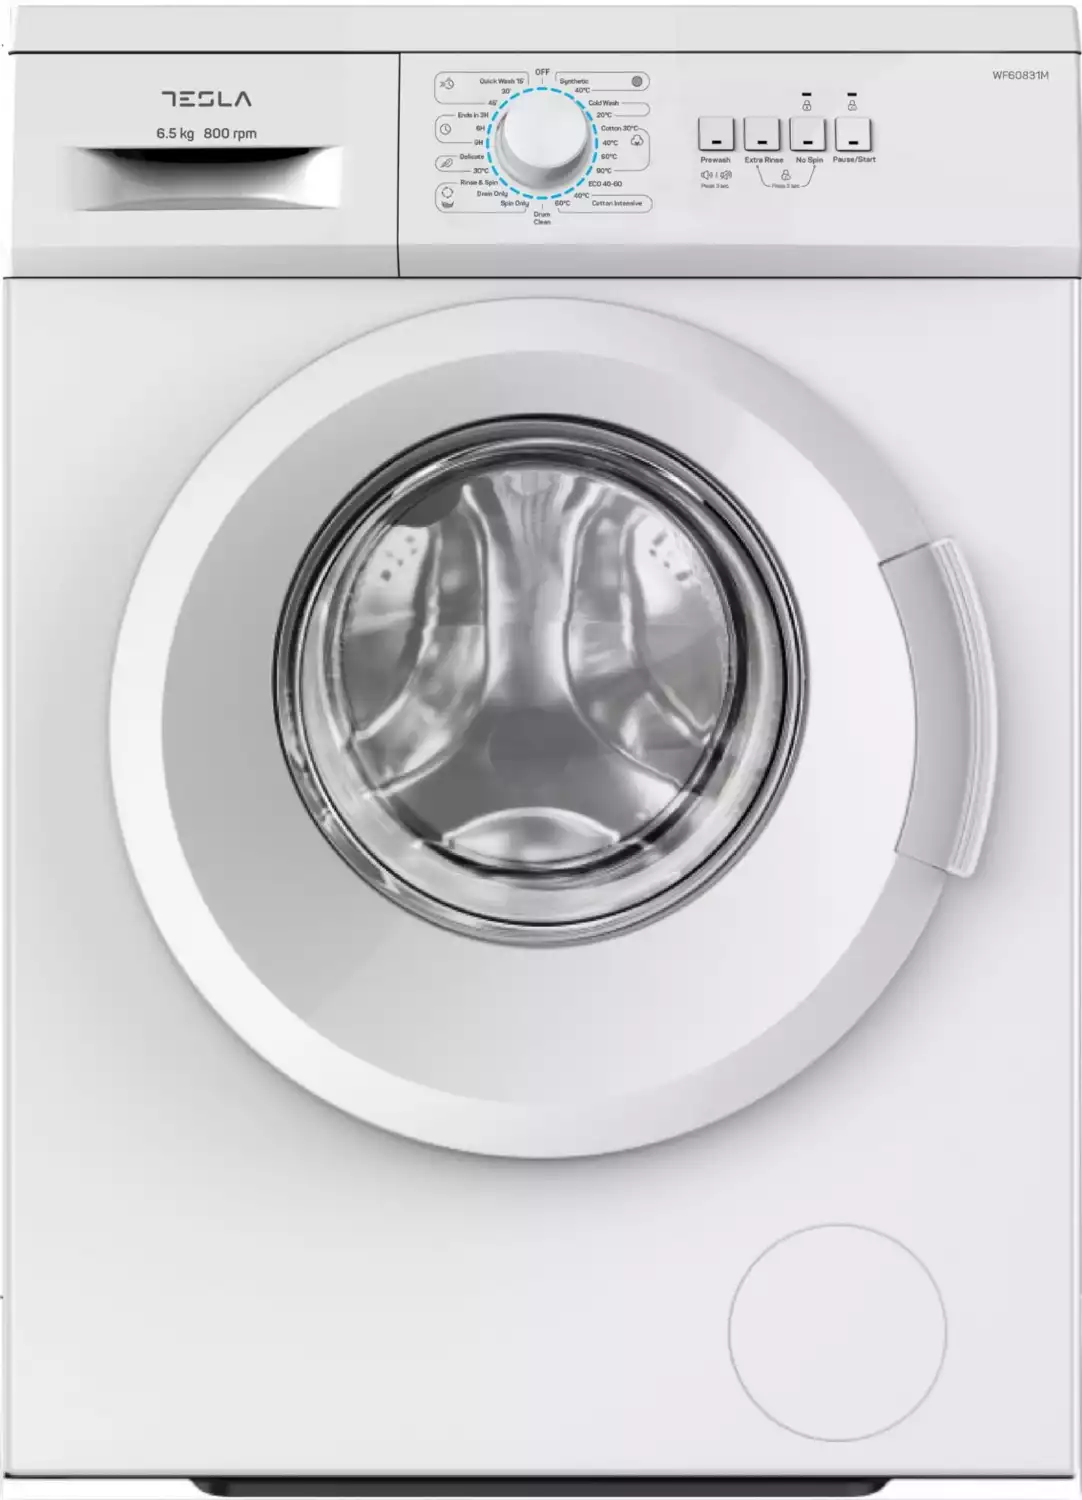 tesla-pralni-stroj-wf60831m-aliansa-si-1.jpg.webp